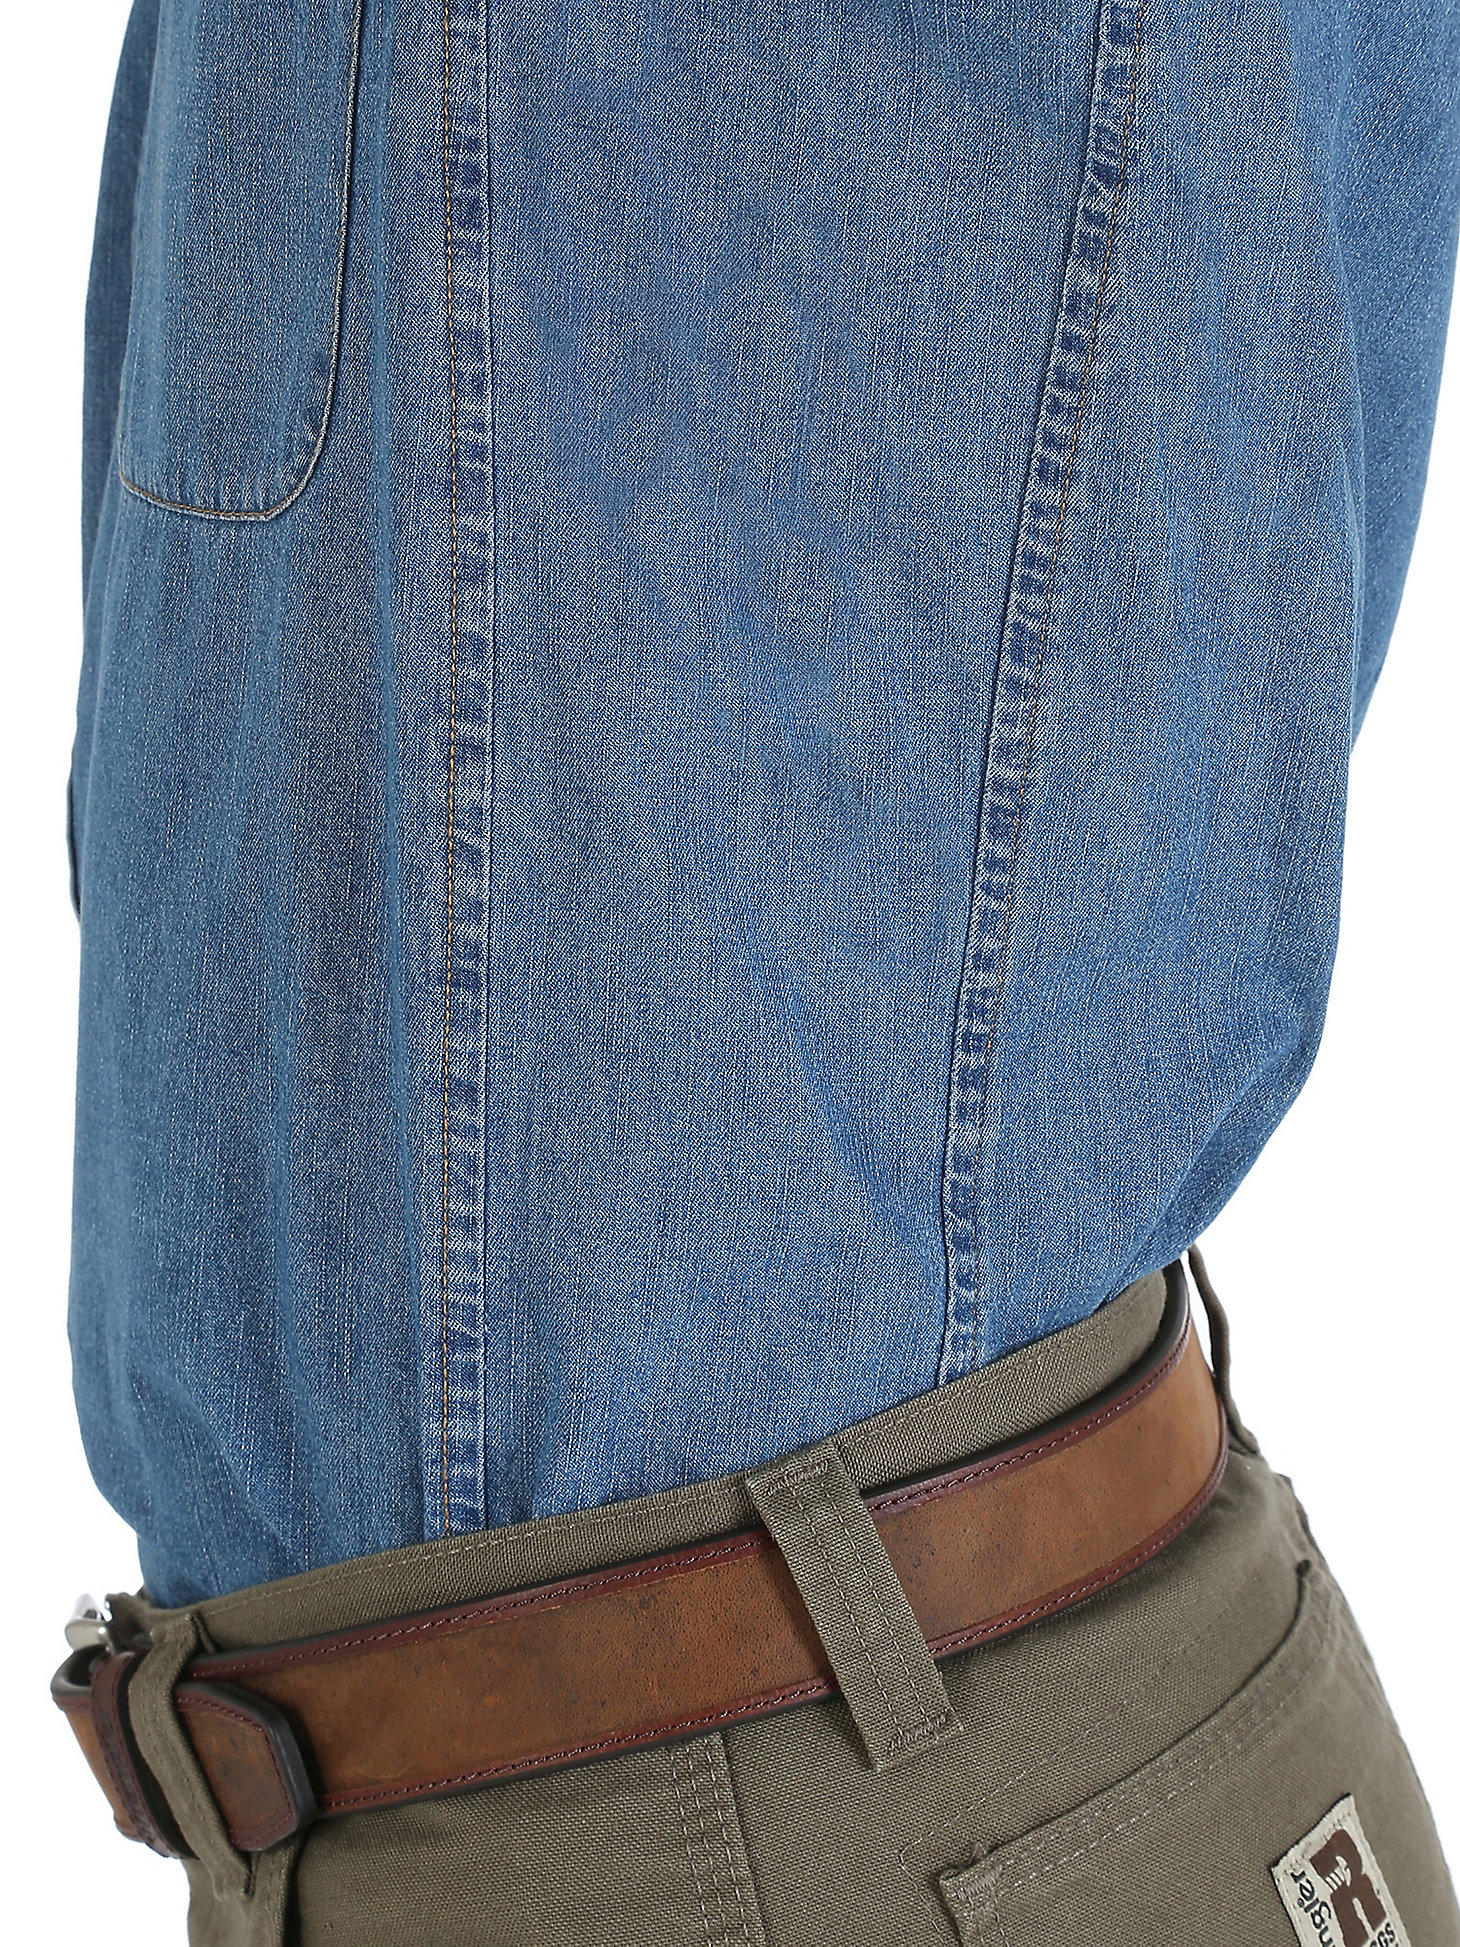 Wrangler® RIGGS Workwear® Long Sleeve Button Down Solid Denim Work Shirt in Antique alternative view 3